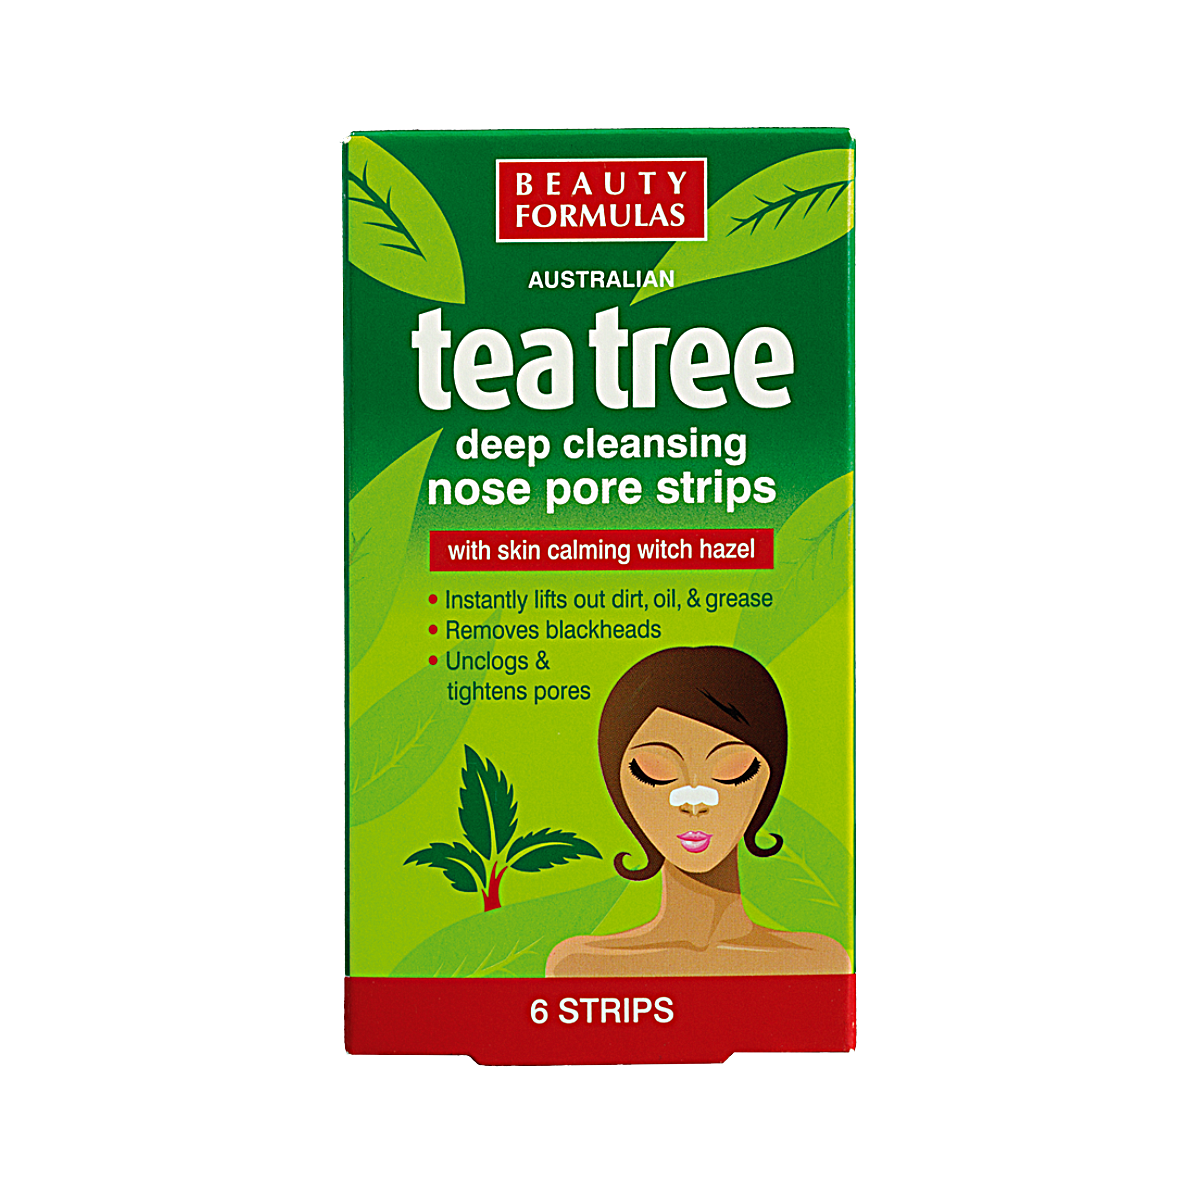 Tea tree deep cleansing nose pore strips.